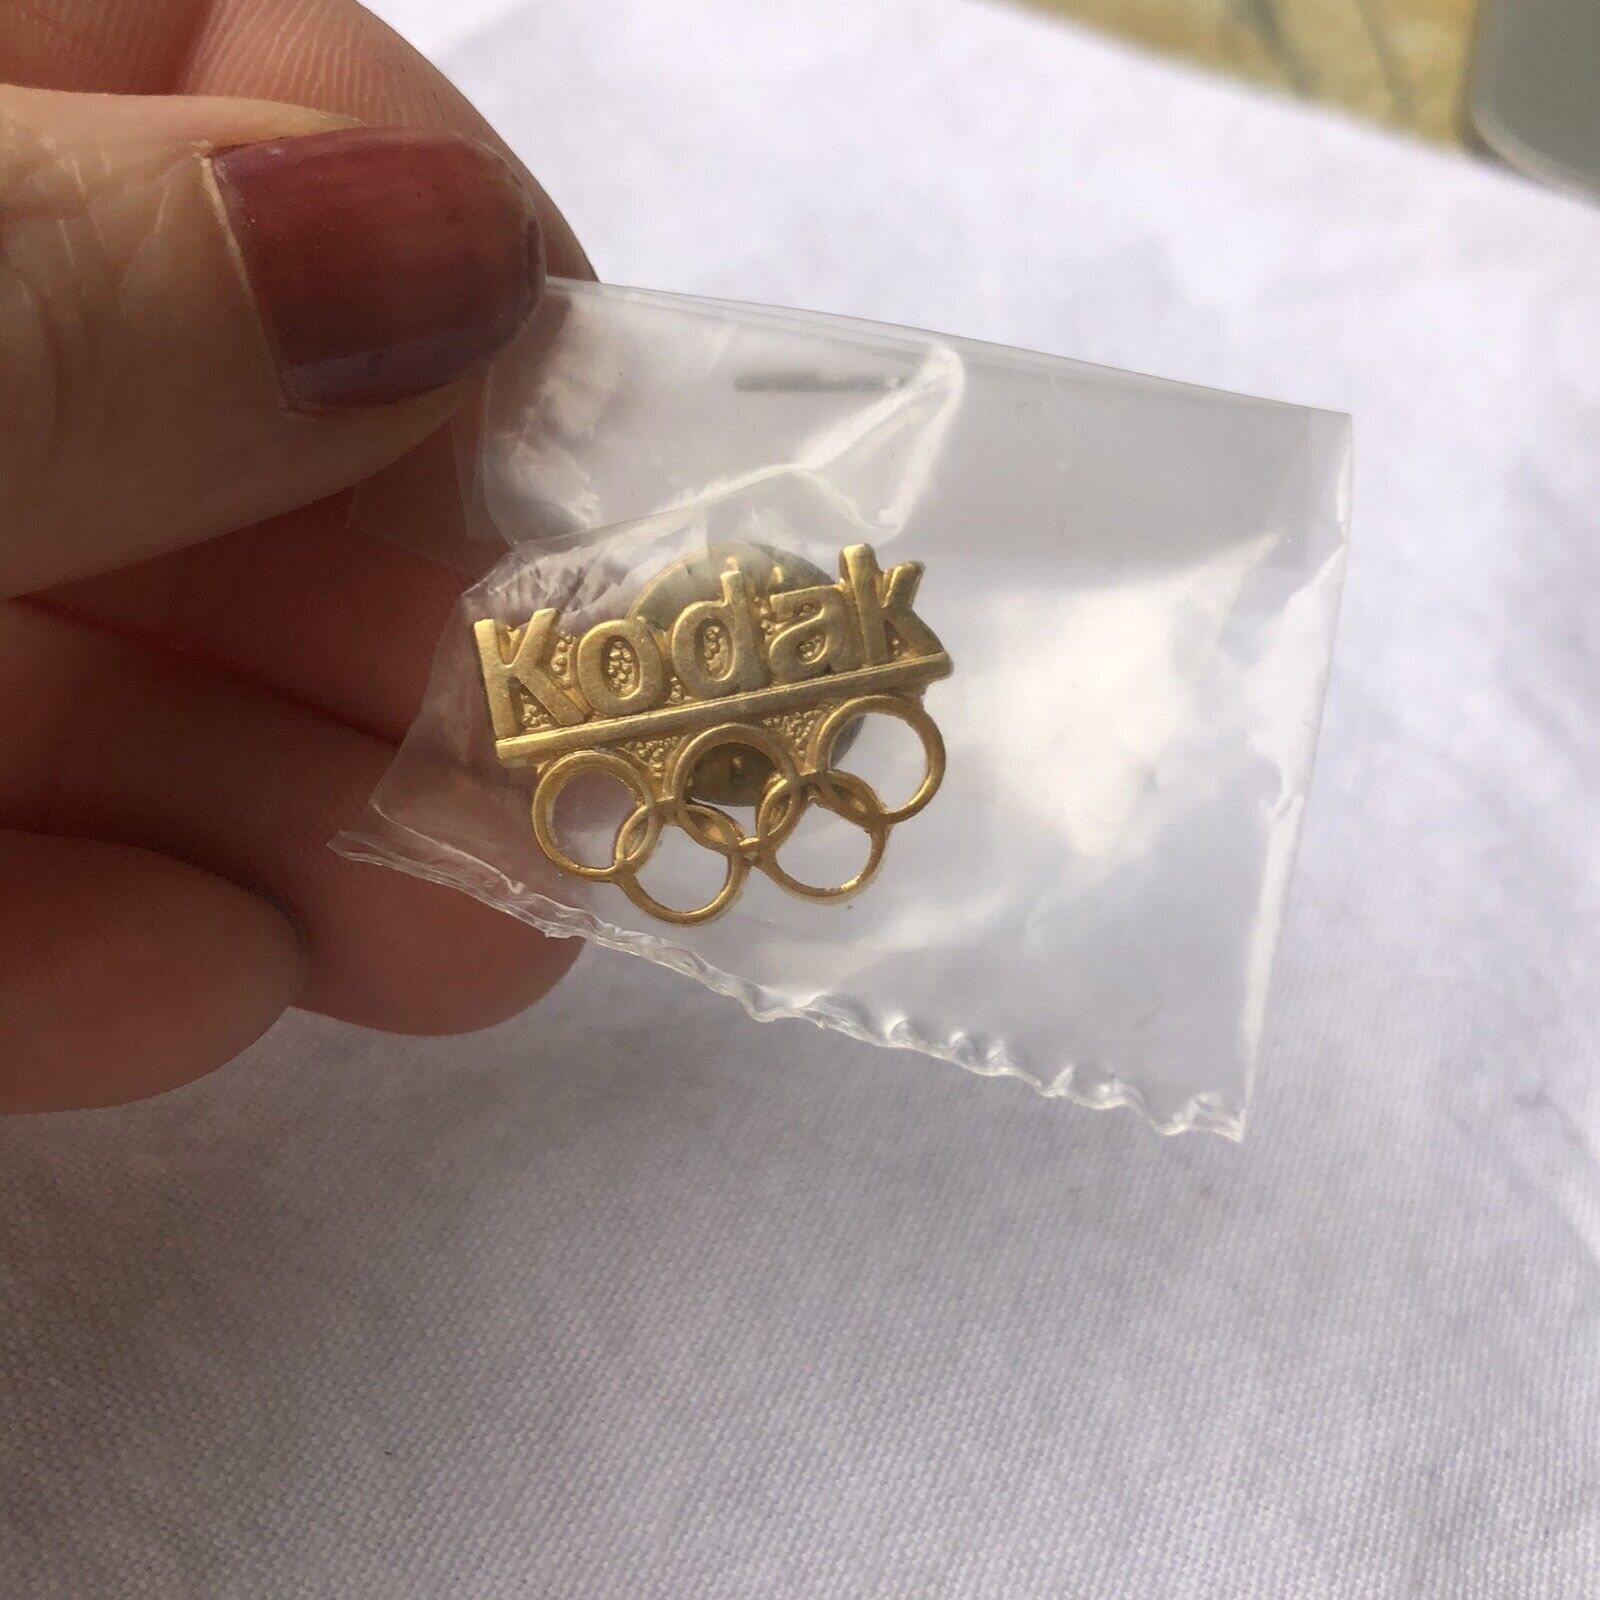 all gold Kodak Olympic rings vintage lapel pin